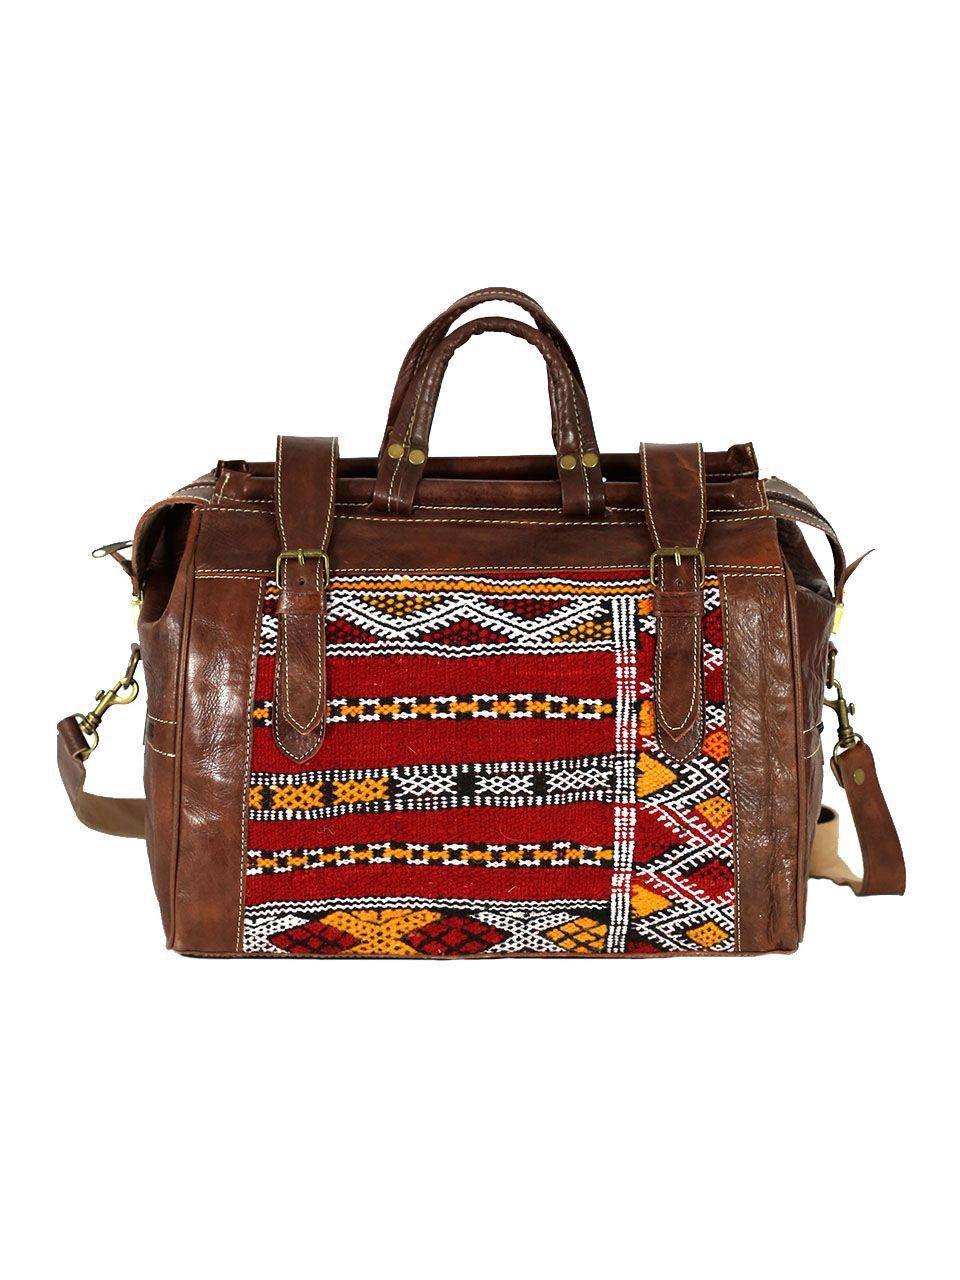 Buy Leather and Kilim travel bag